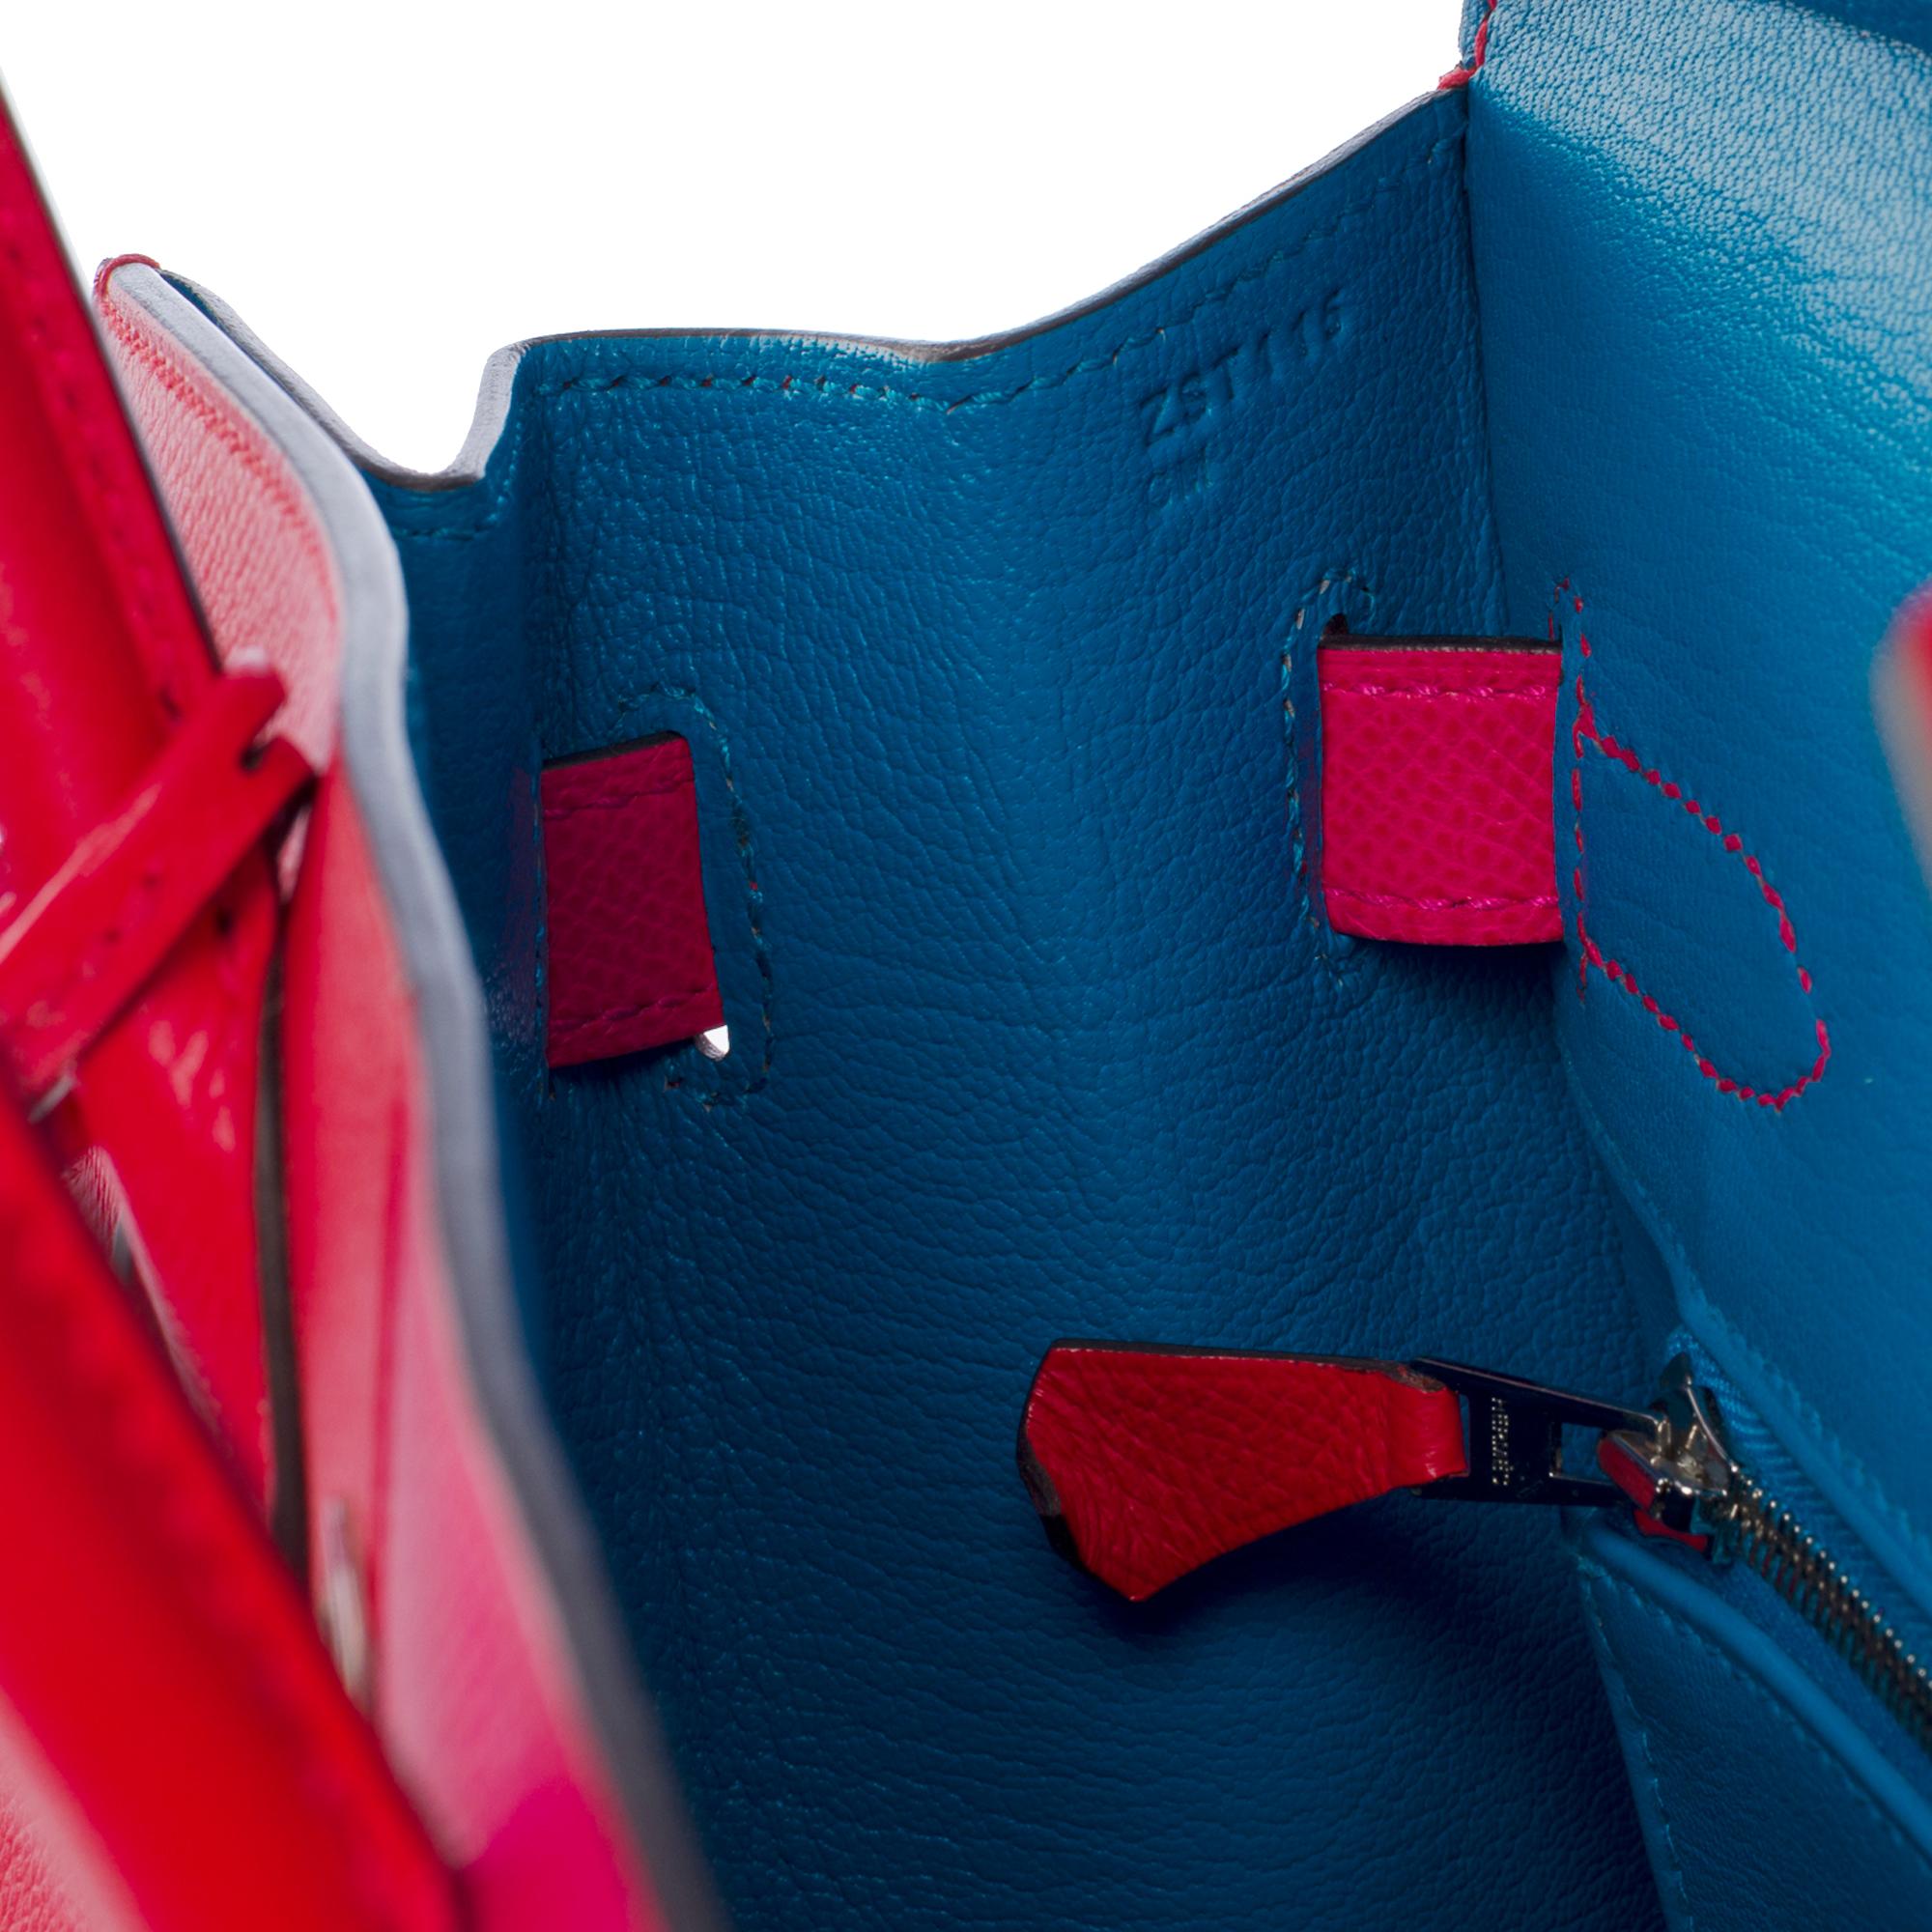 New Hermès Kazak limited edition Birkin 30 handbag in Red/Pink Epsom leather, SHW 3